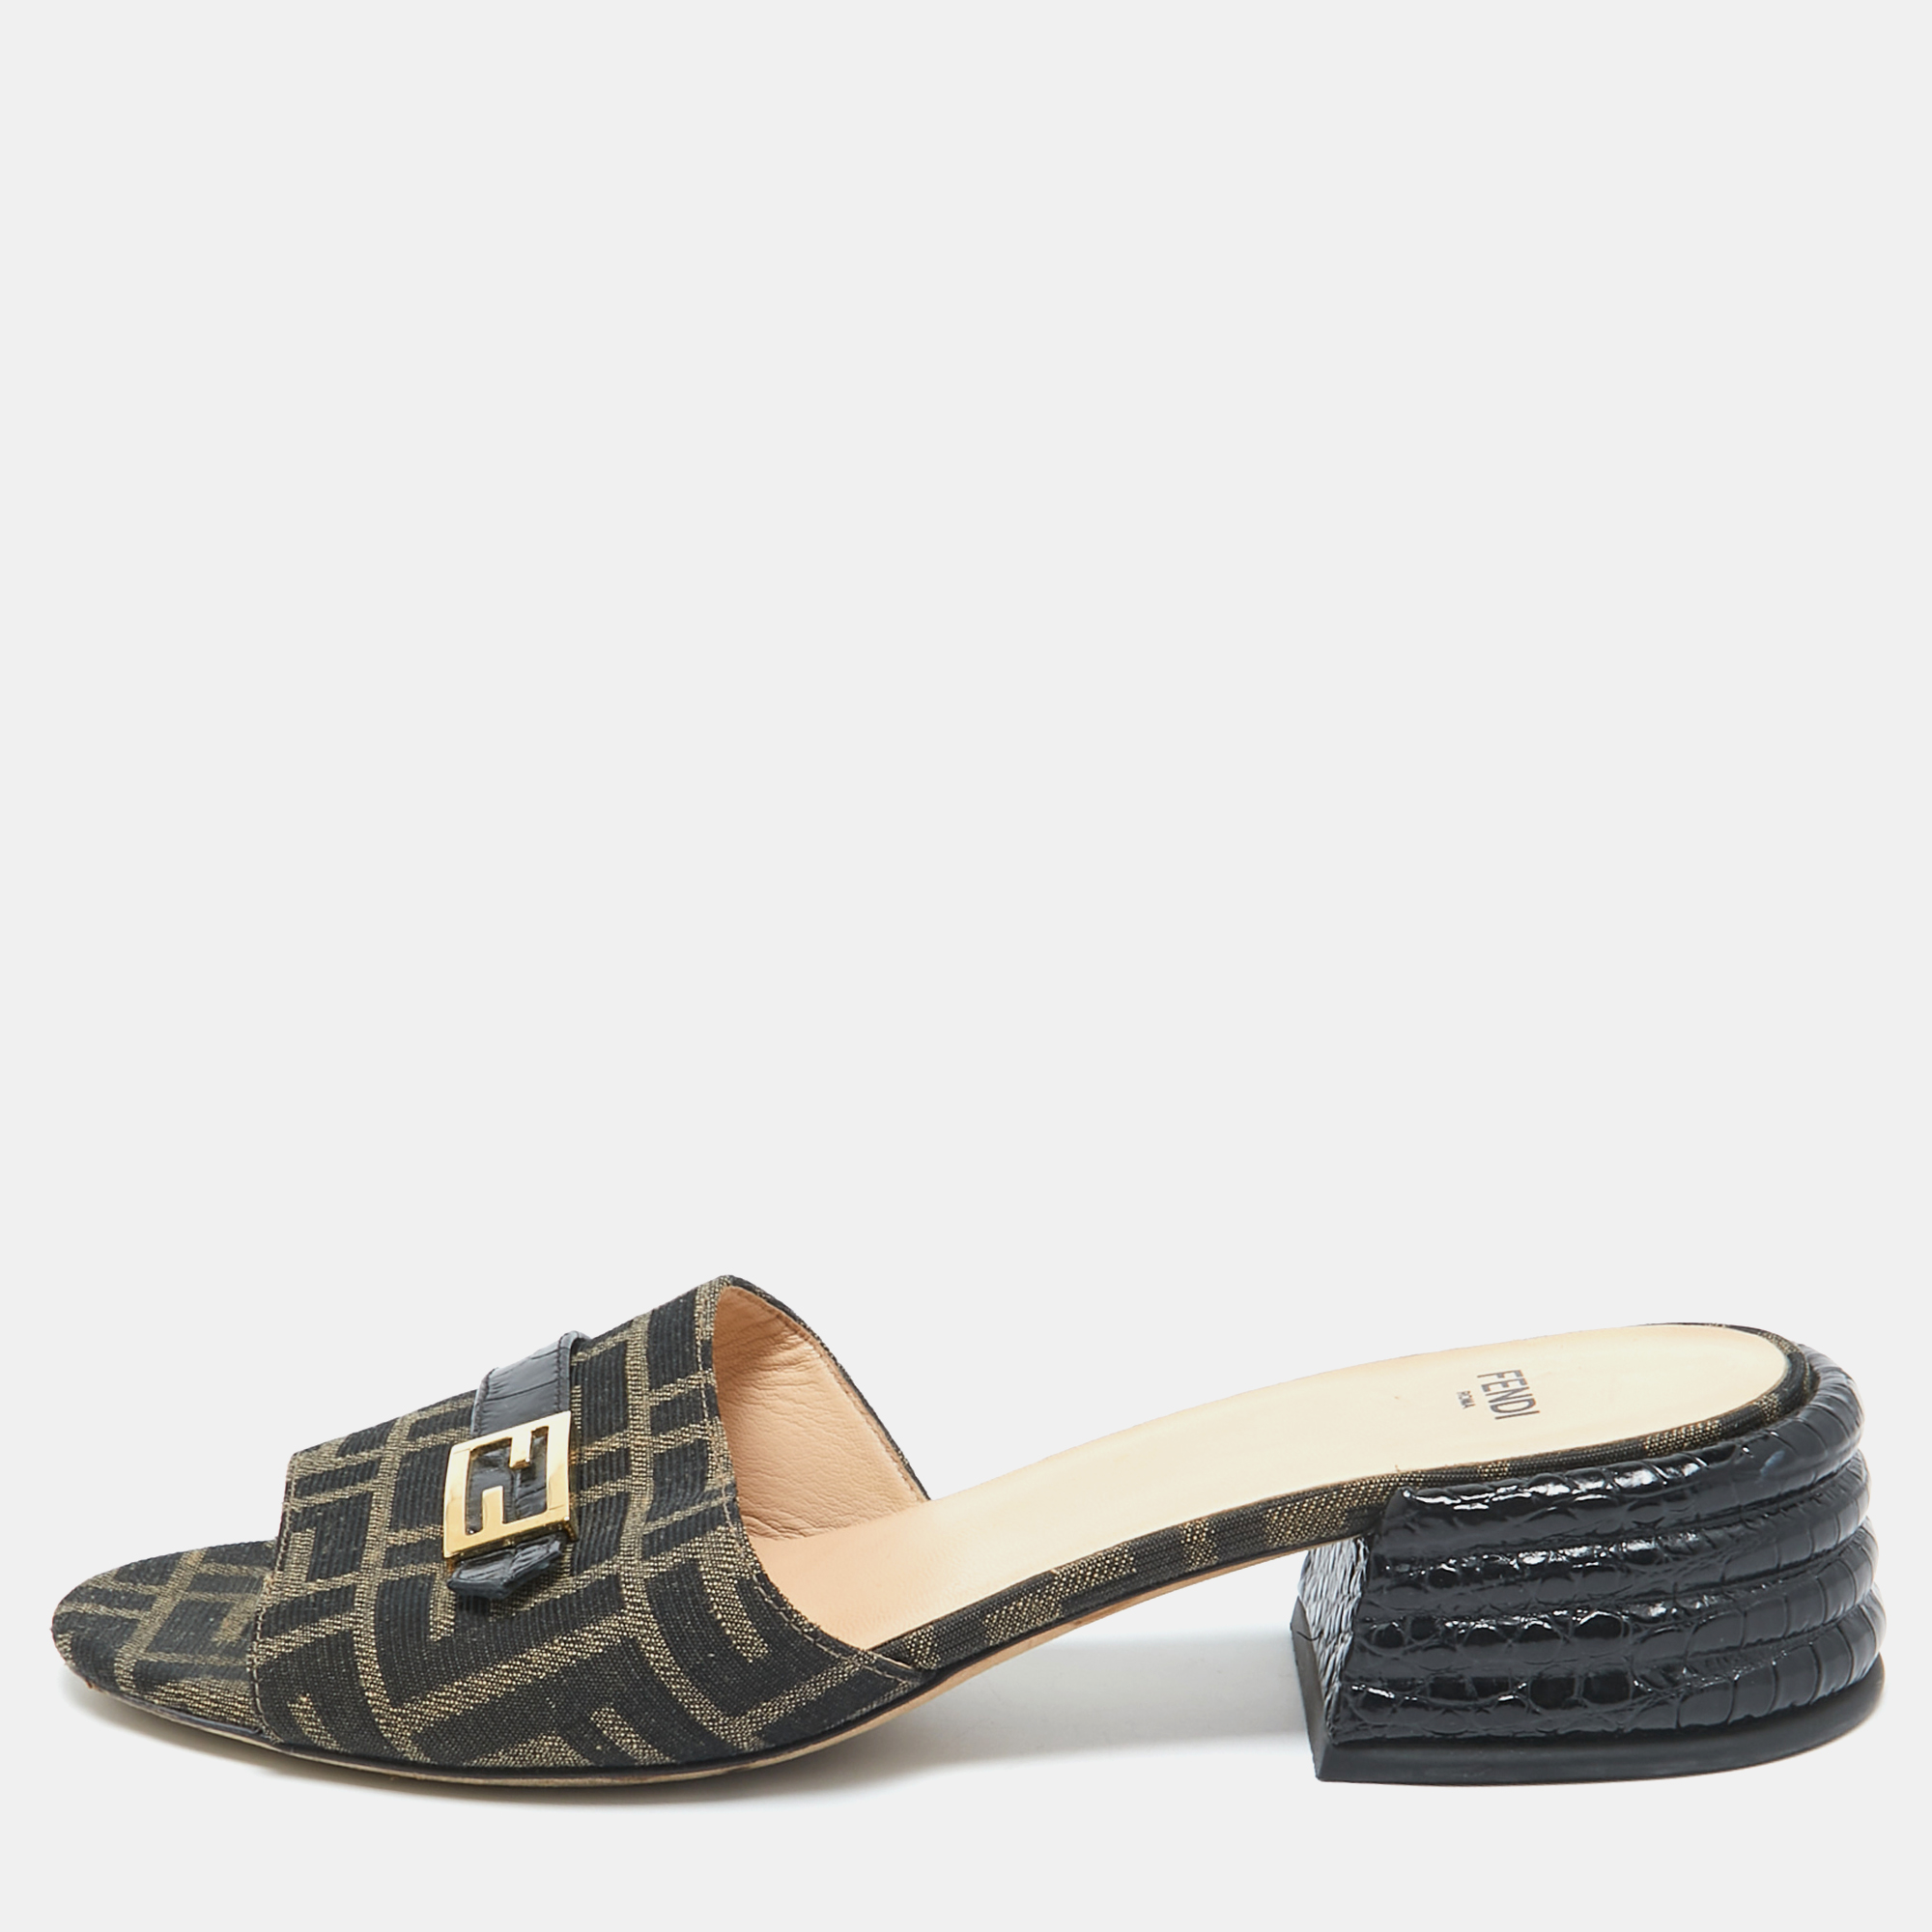 Fendi brown zucca canvas block heel slide sandals size 39.5